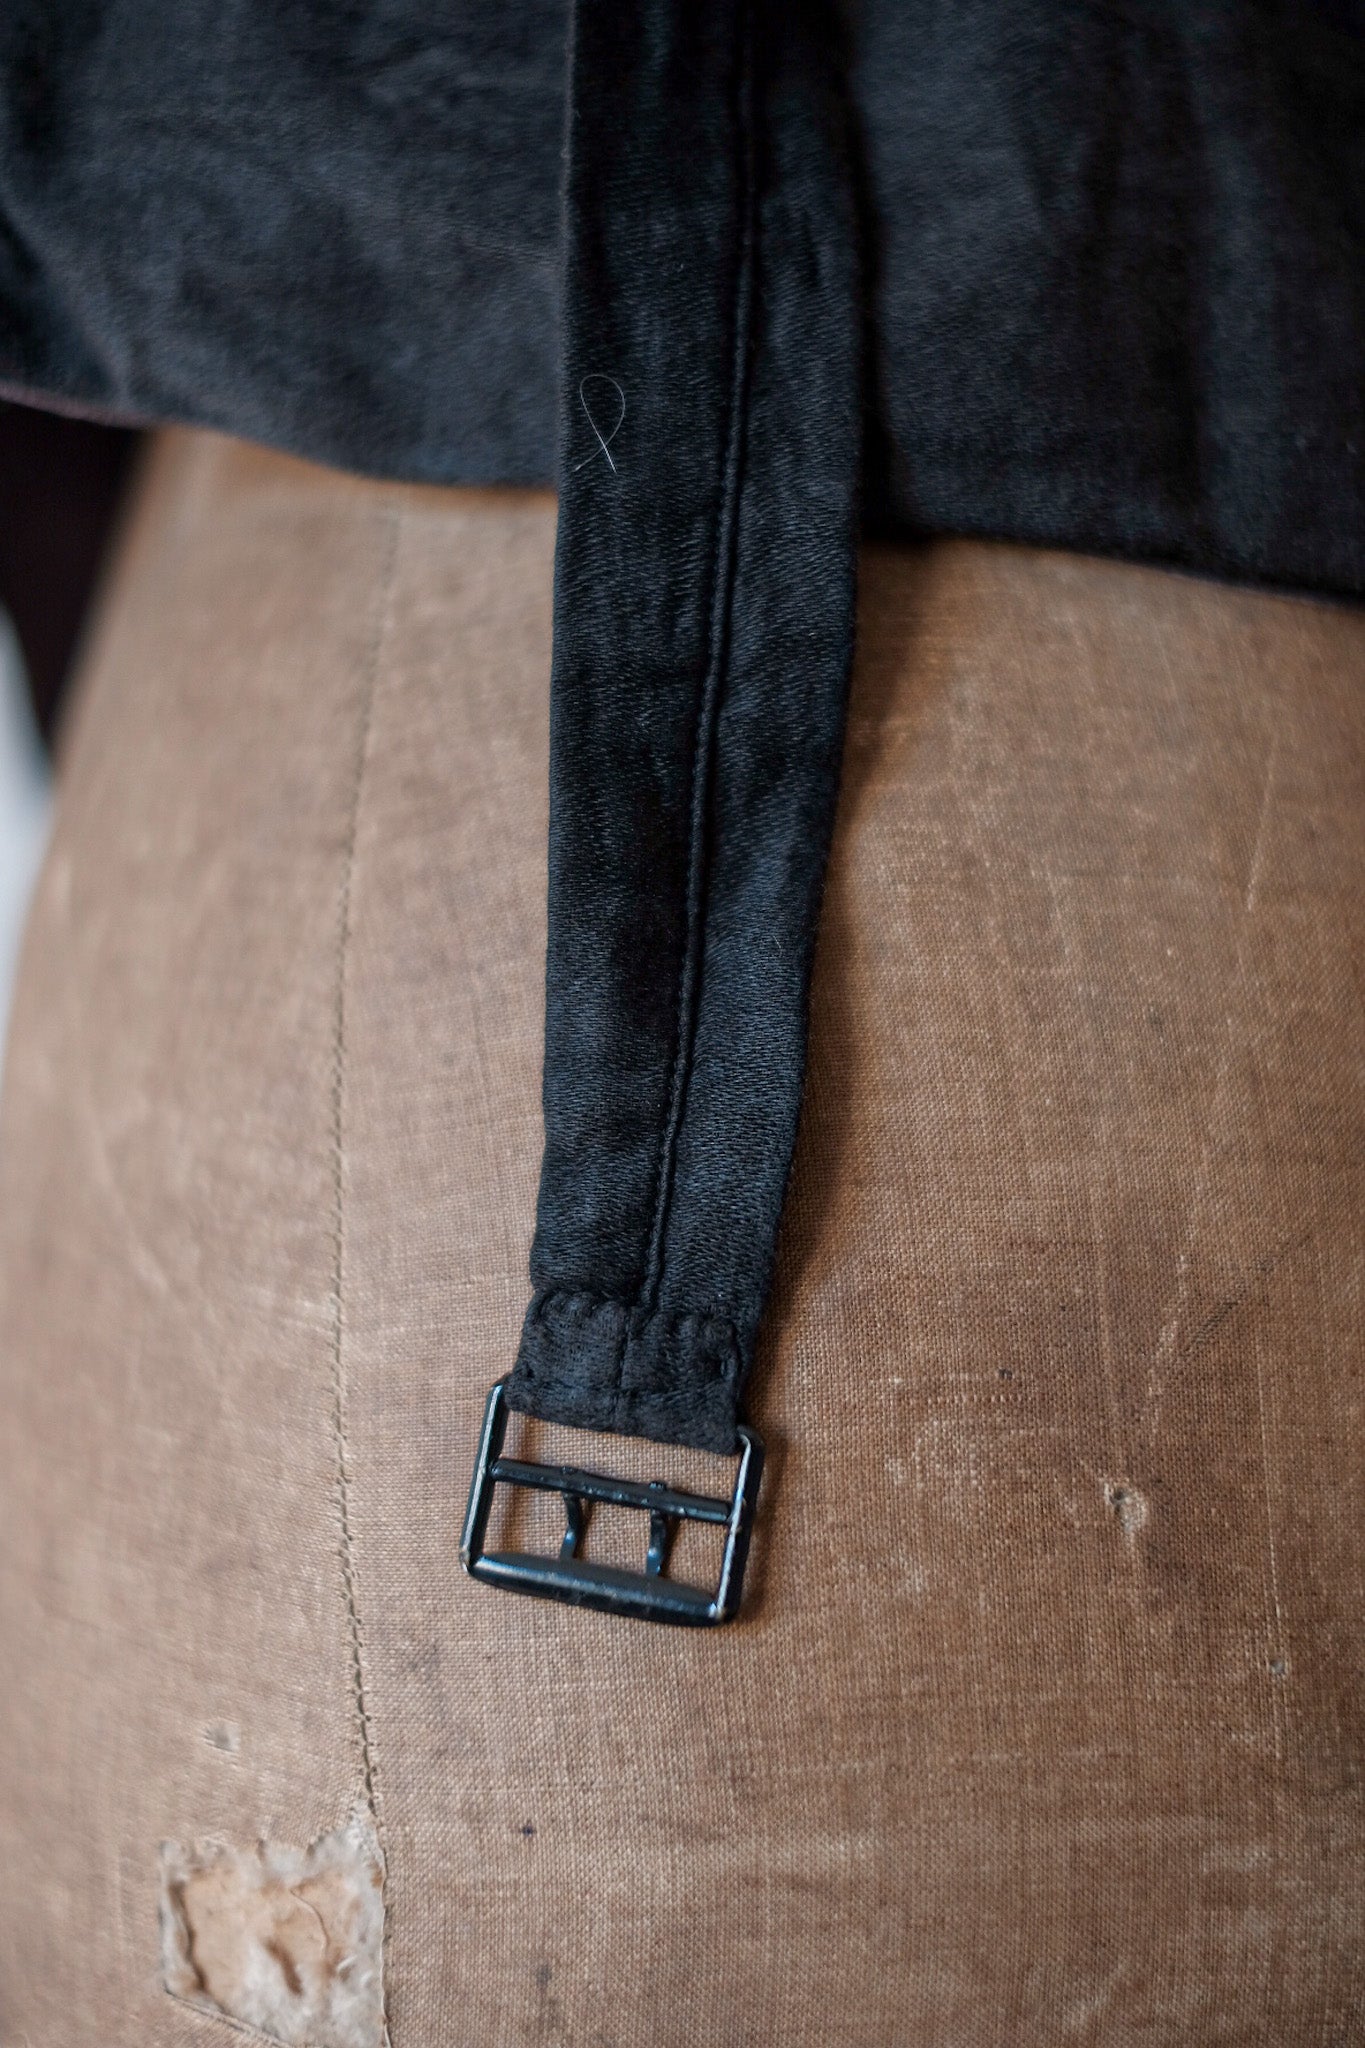 【~30's】French Vintage Brown Velour Gilet Jacket